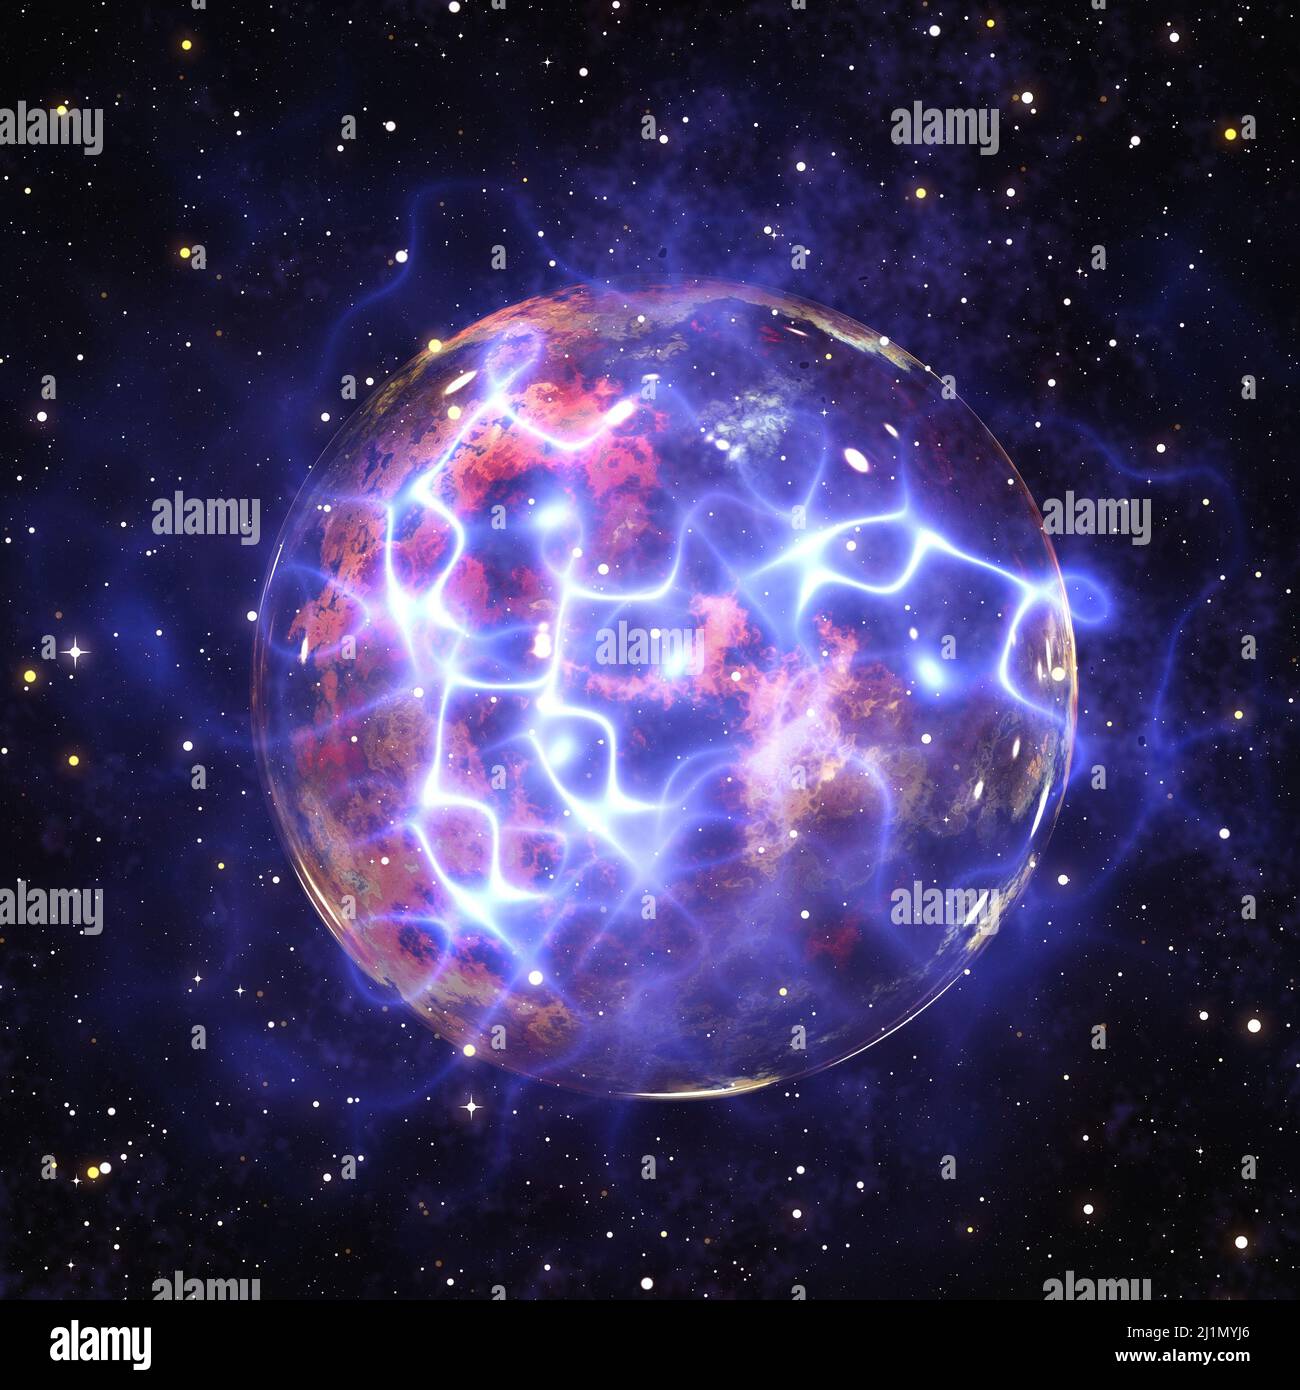 neutron star concept illustration Stock Photo